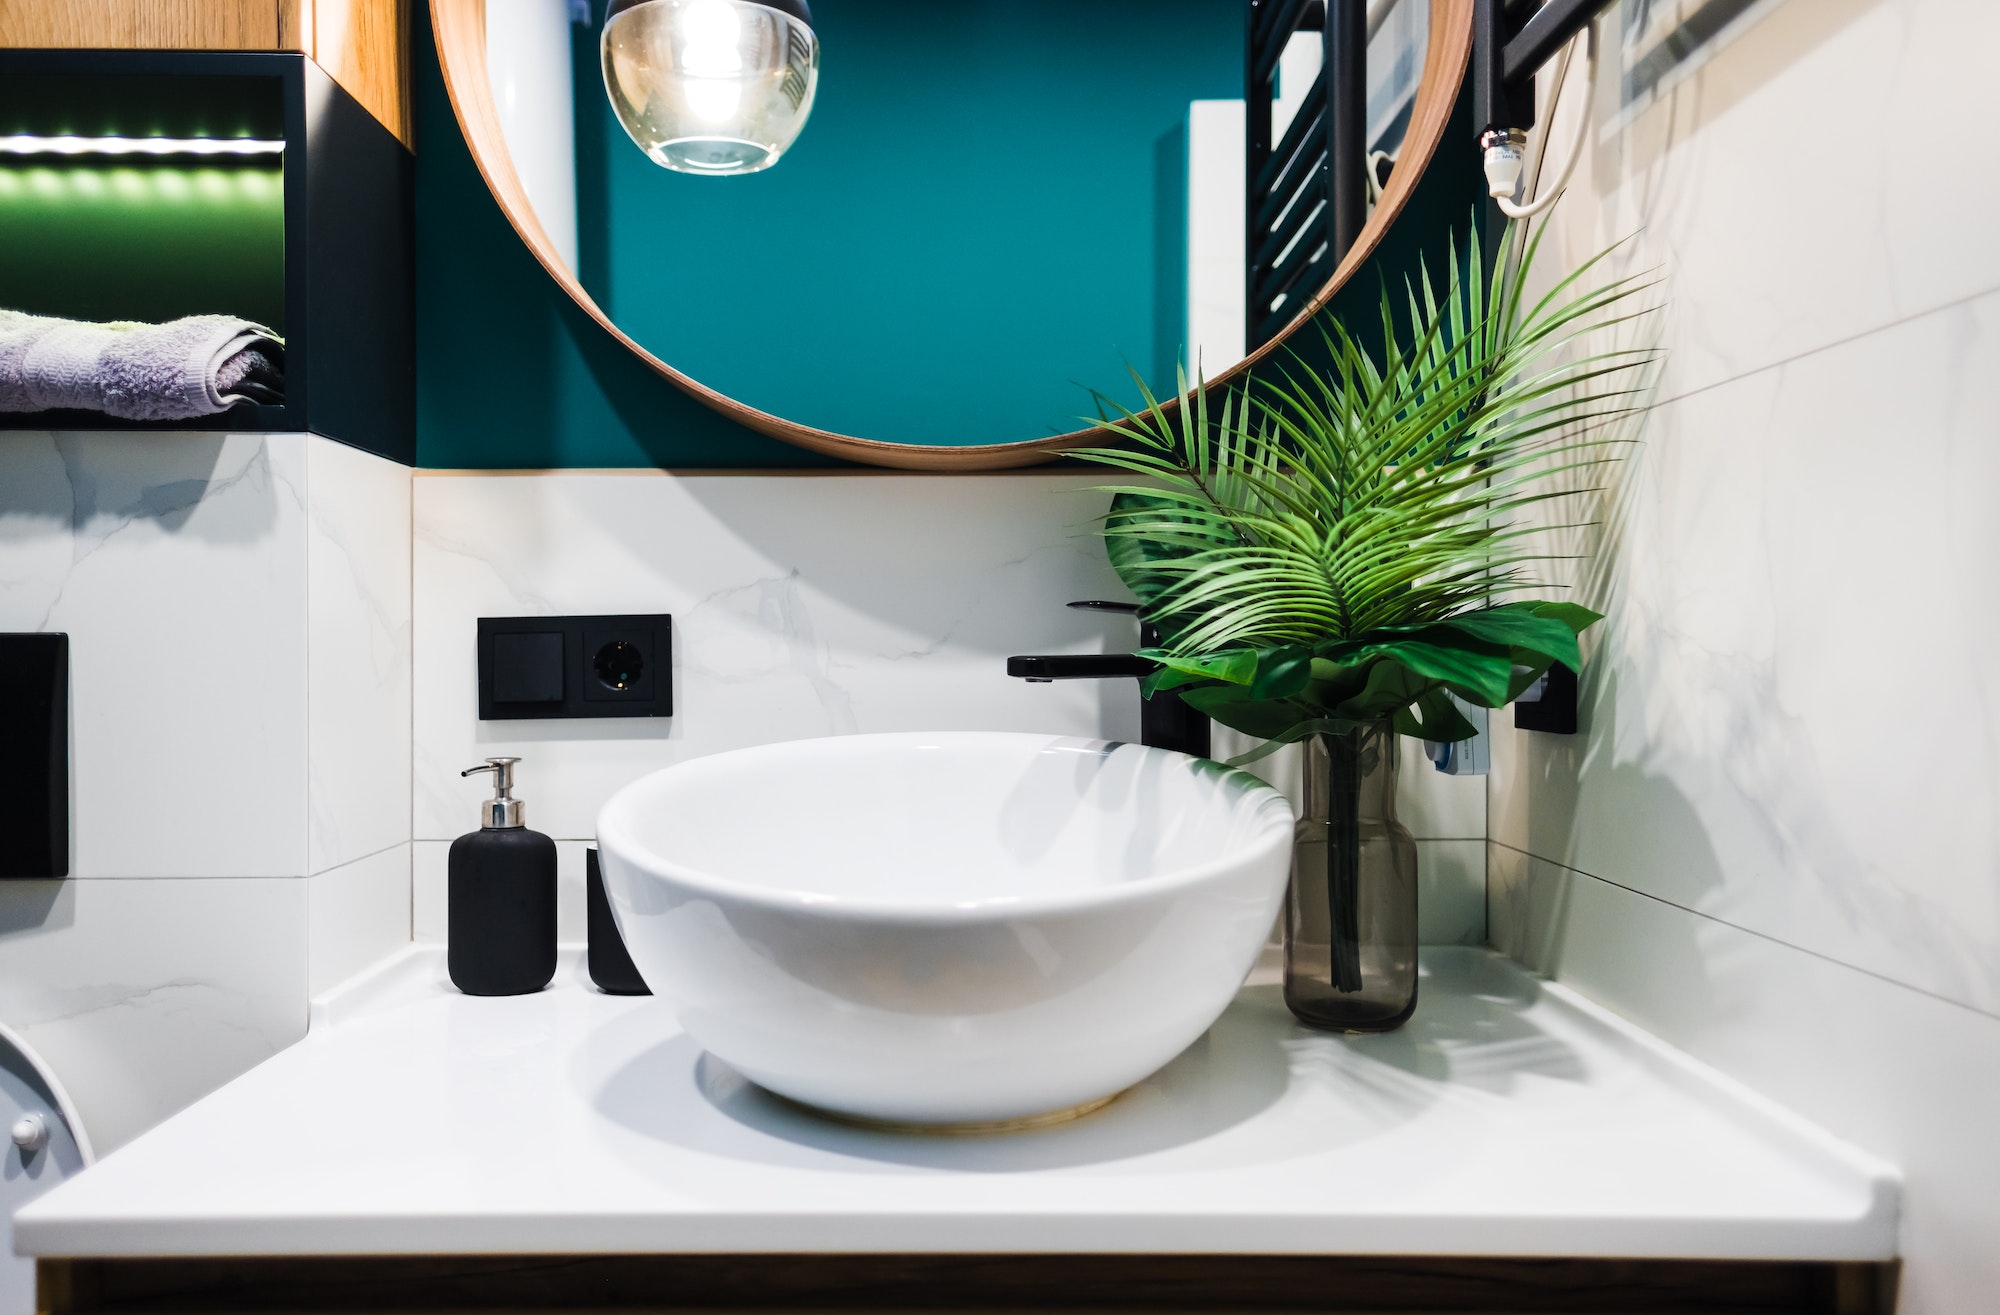 Washbasin in a modern bathroom with ornamental plants and bathroom accessories.